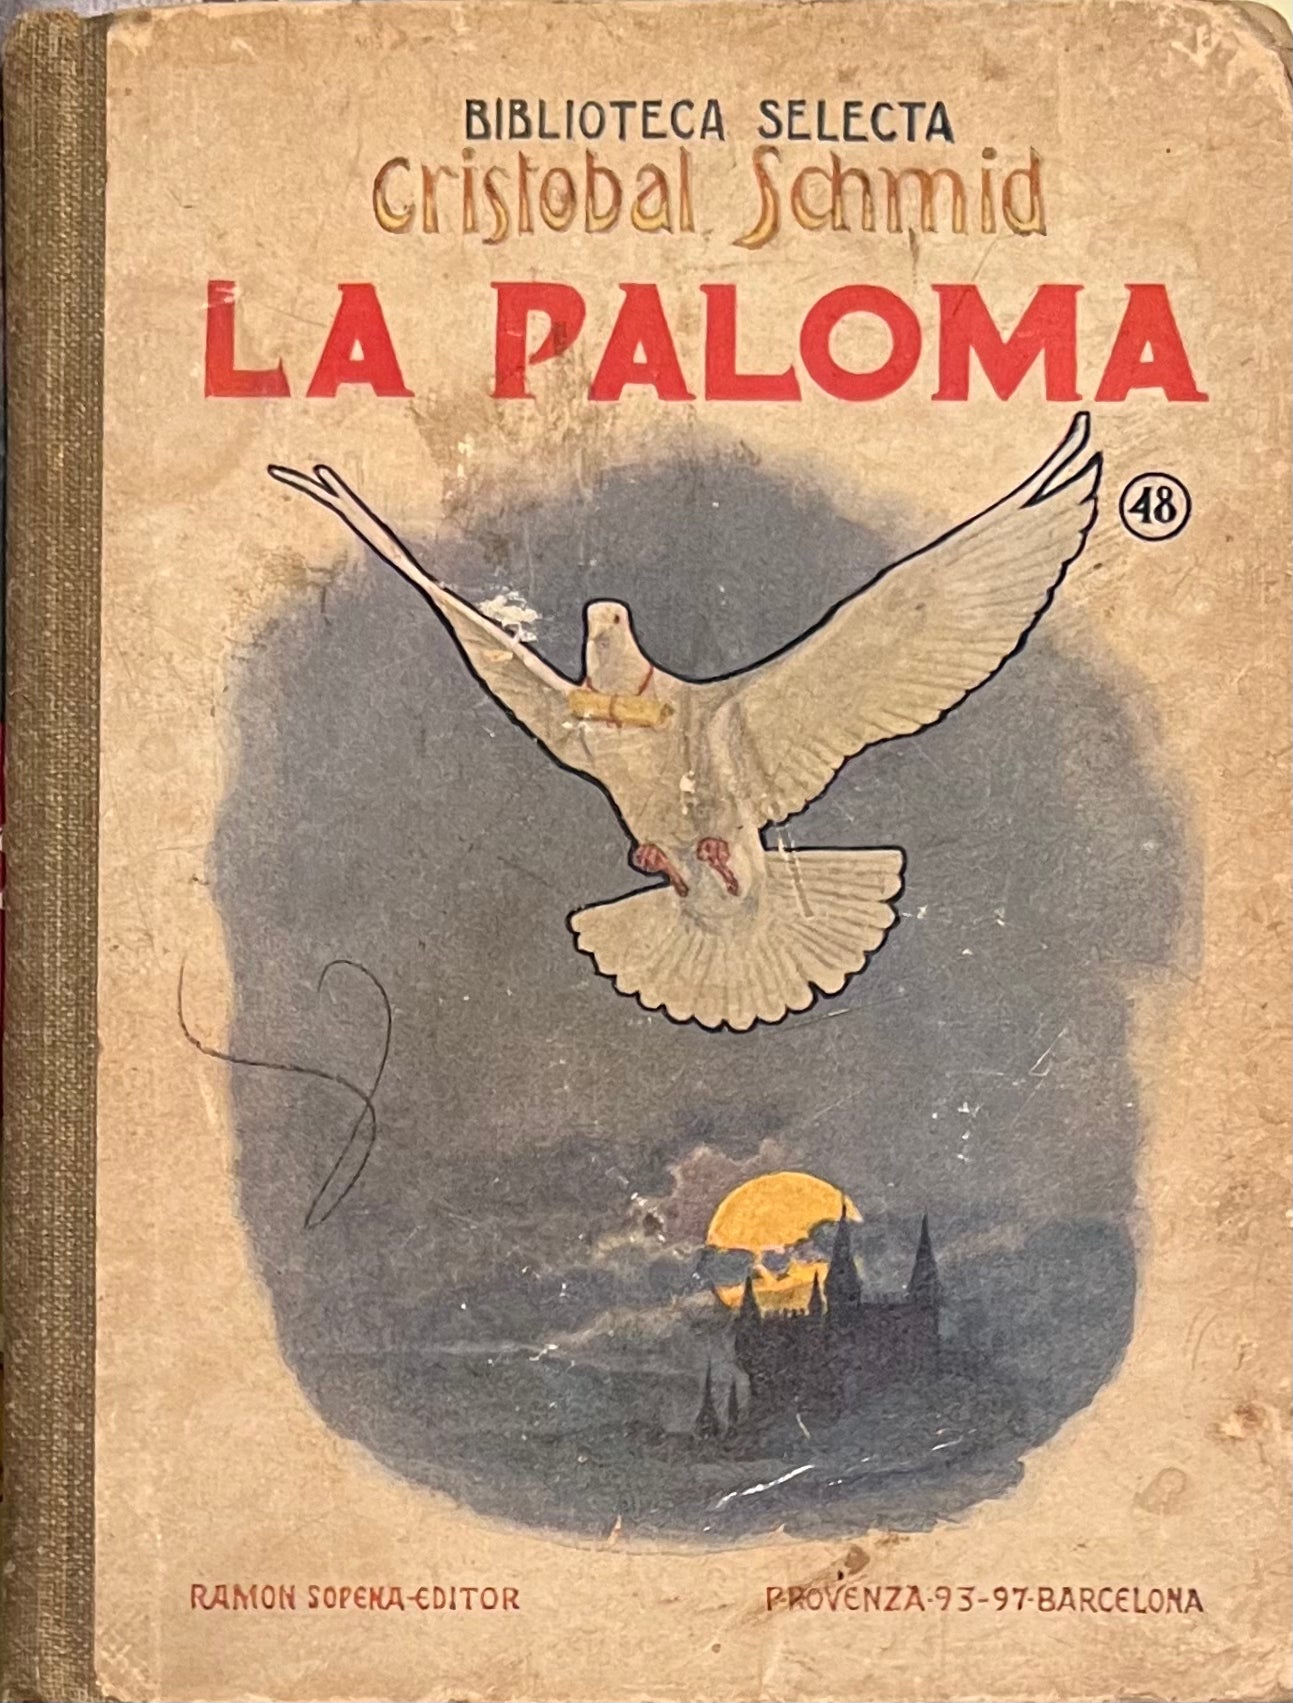 La Paloma, Cristobal Schmid